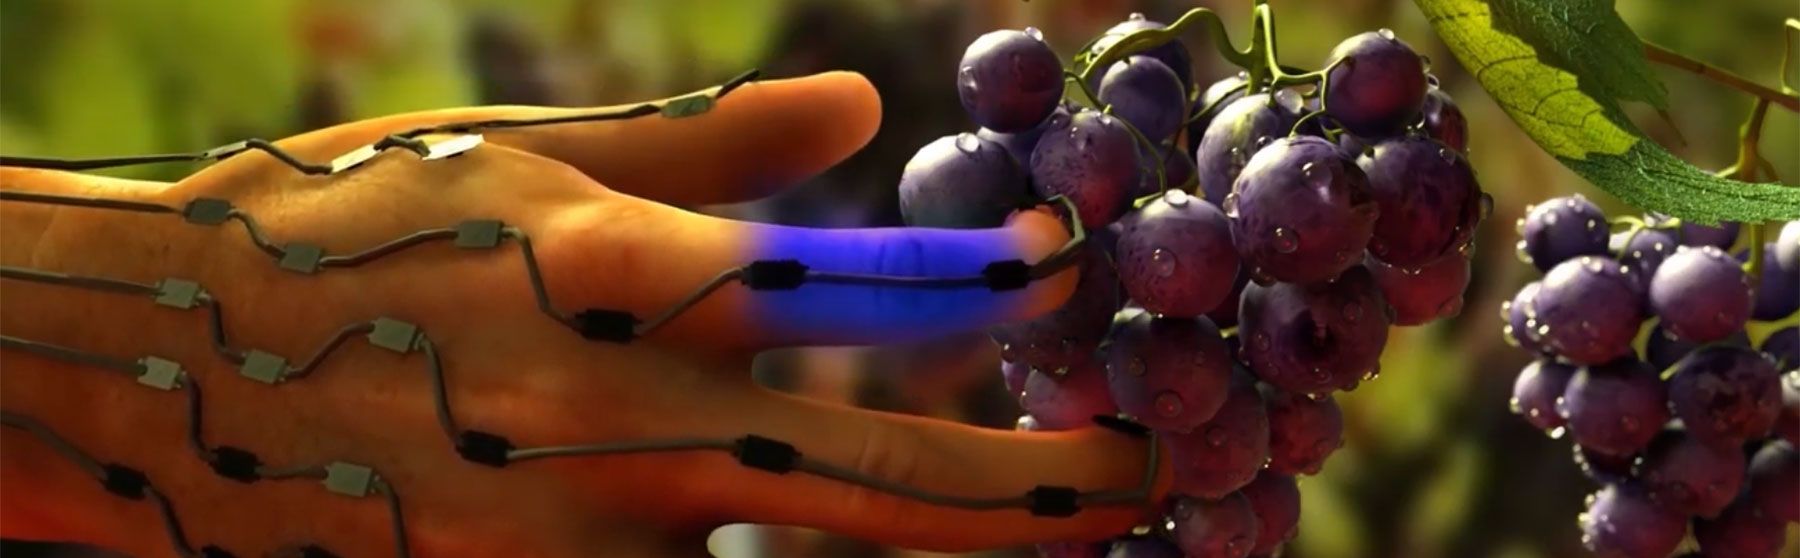 illustration of hand picking grapes